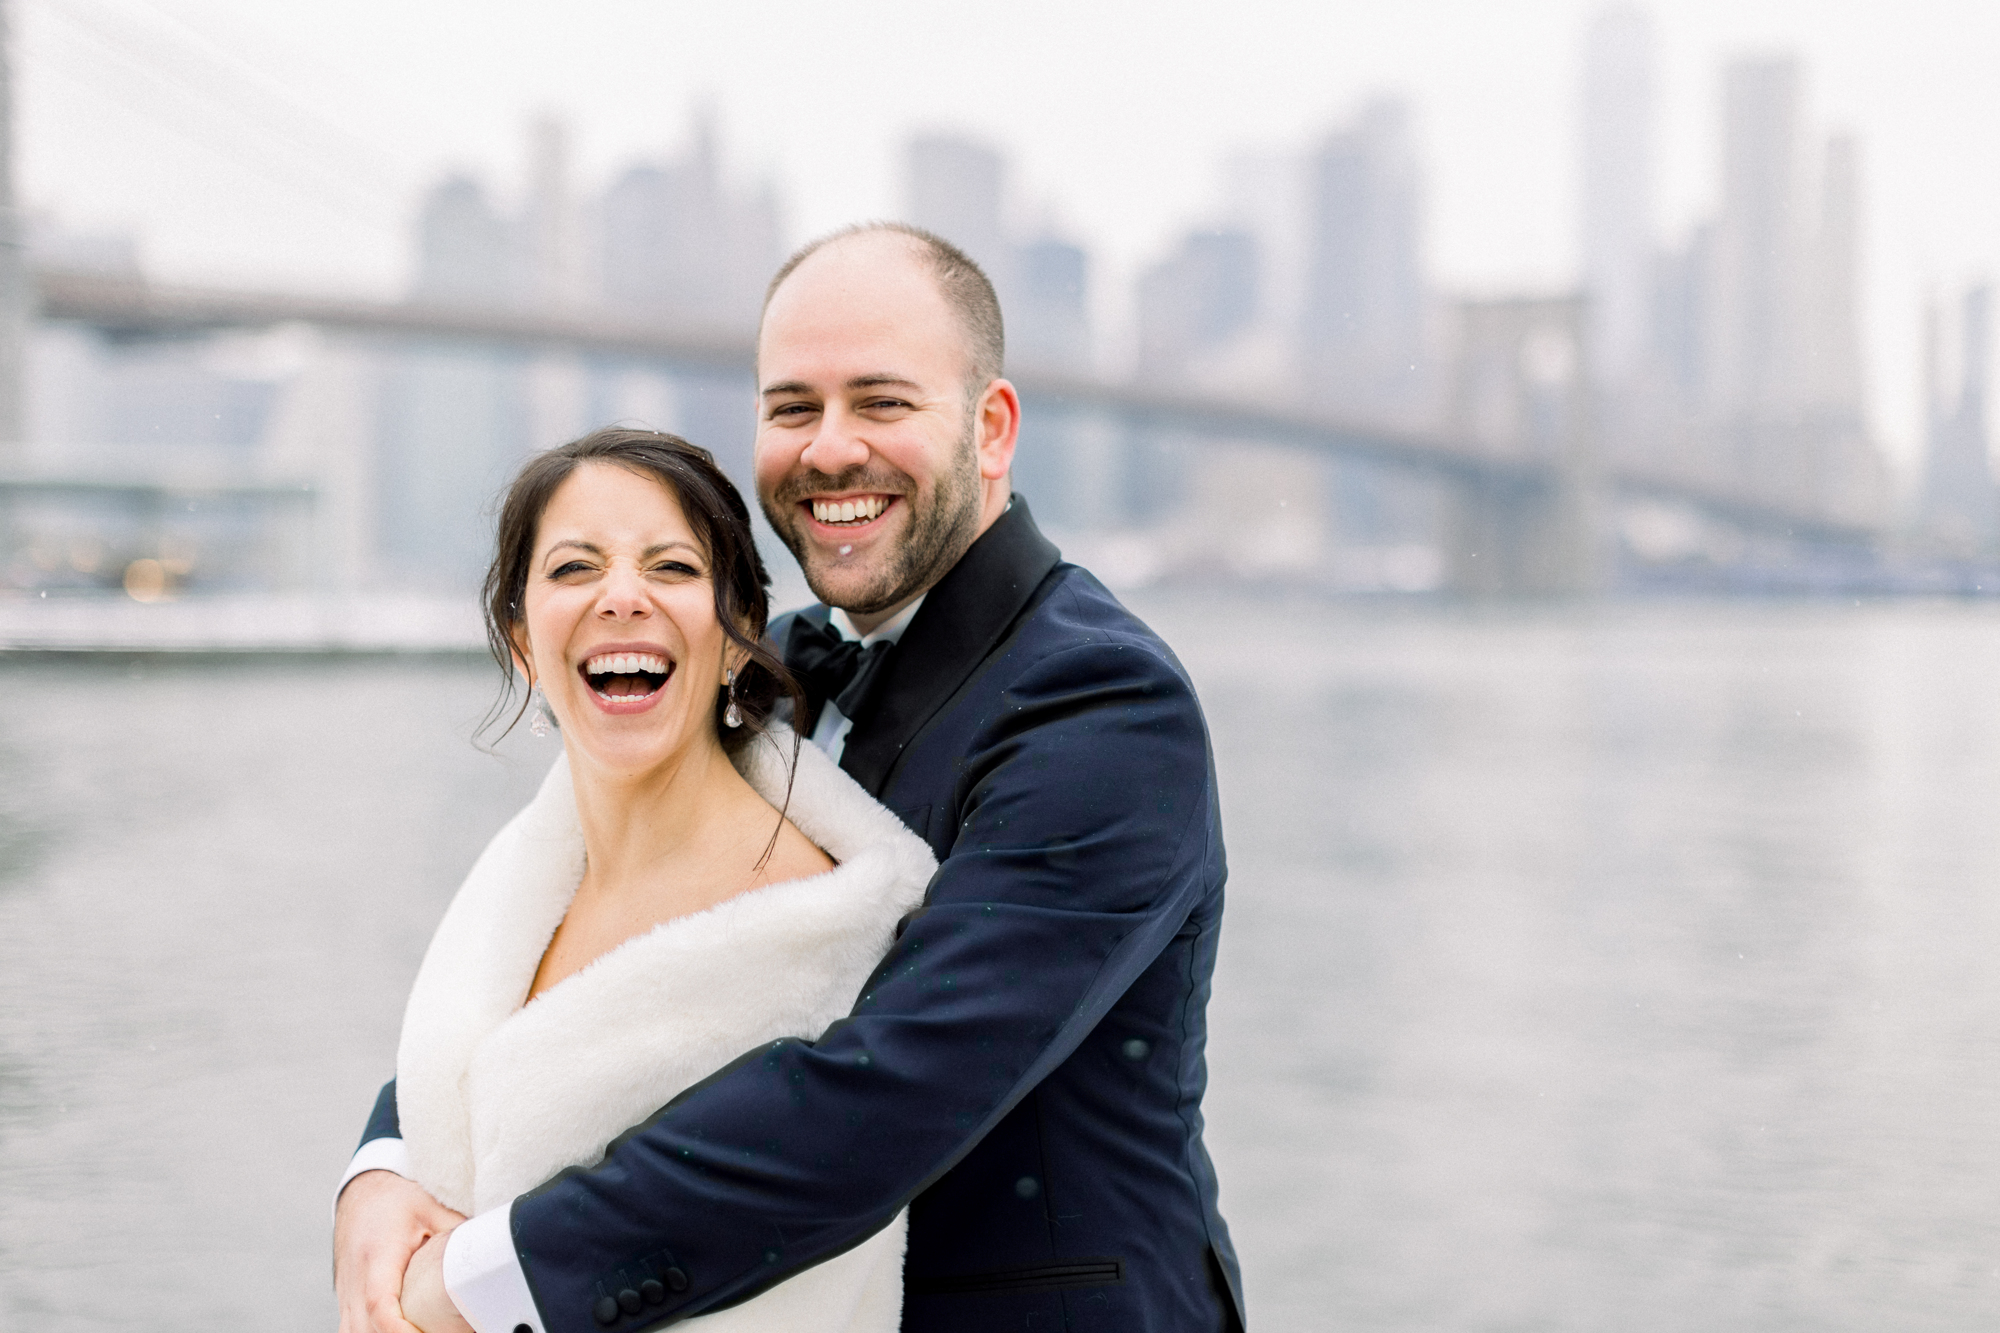 Fun candid wedding photography in Brooklyn Bridge Park